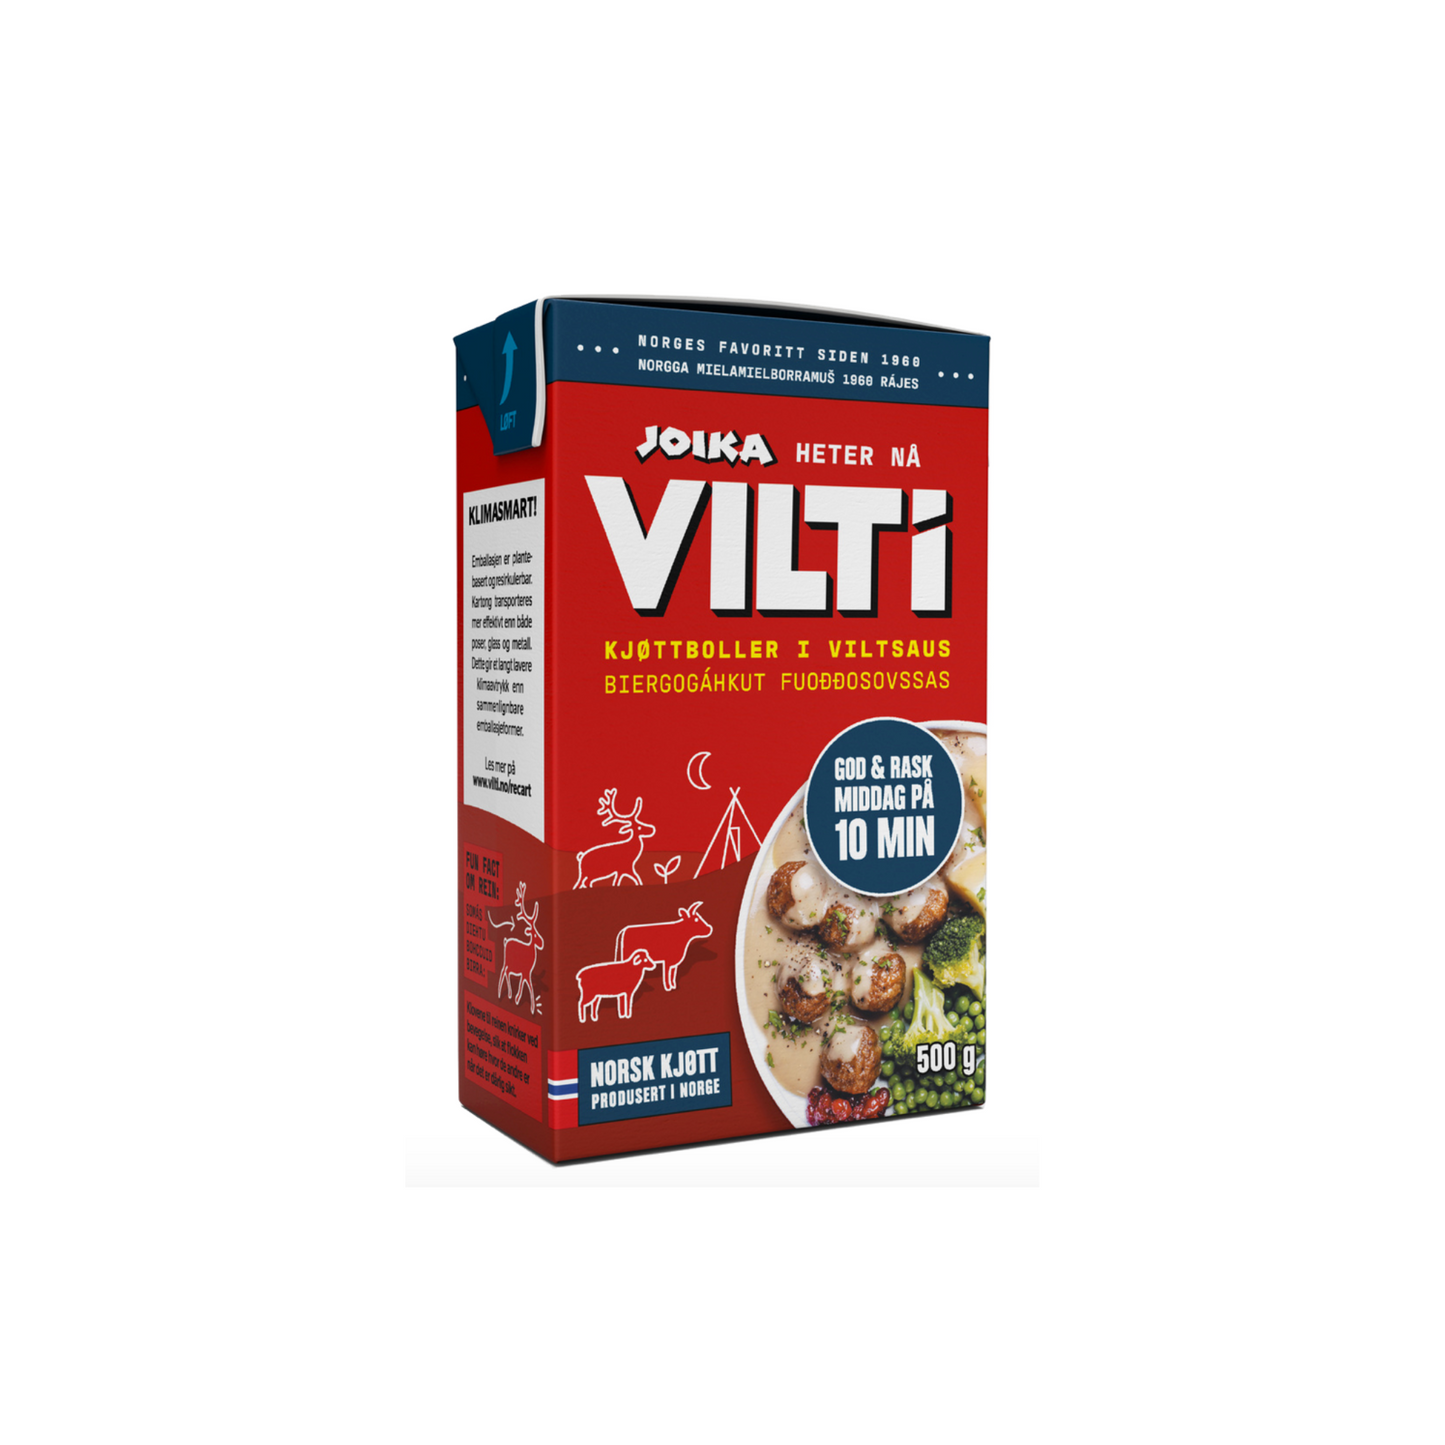 Vilti (Joika) - Norwegian Reindeer Meatballs / Joikakaker 500 Grams (1.1 lbs)